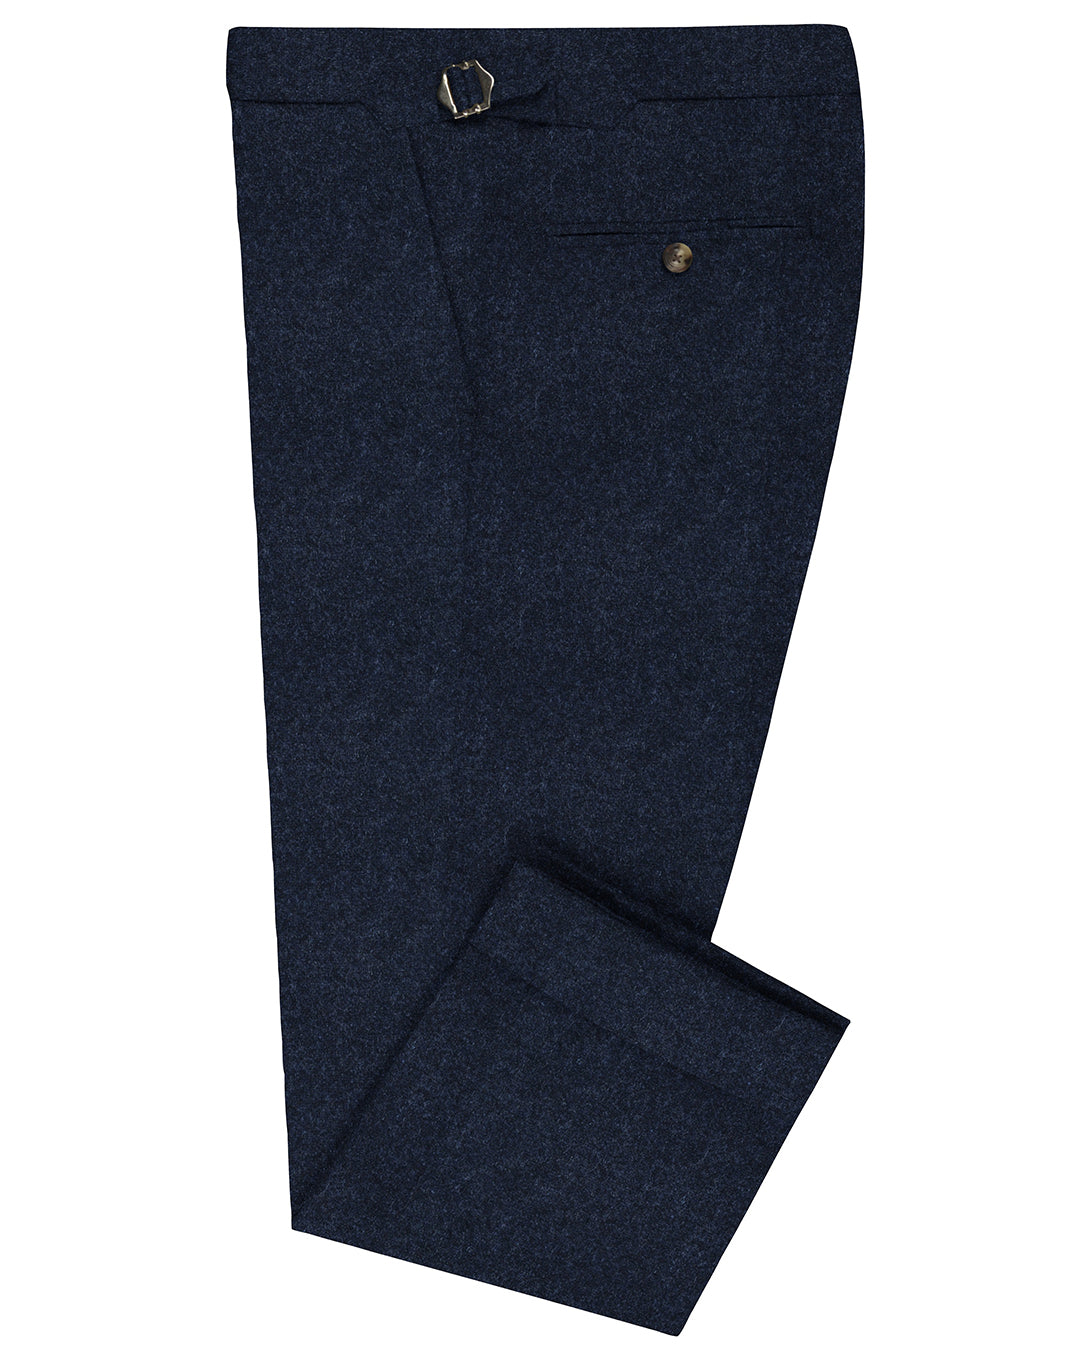 EThomas Wool Cashmere: Dark Blue Wool